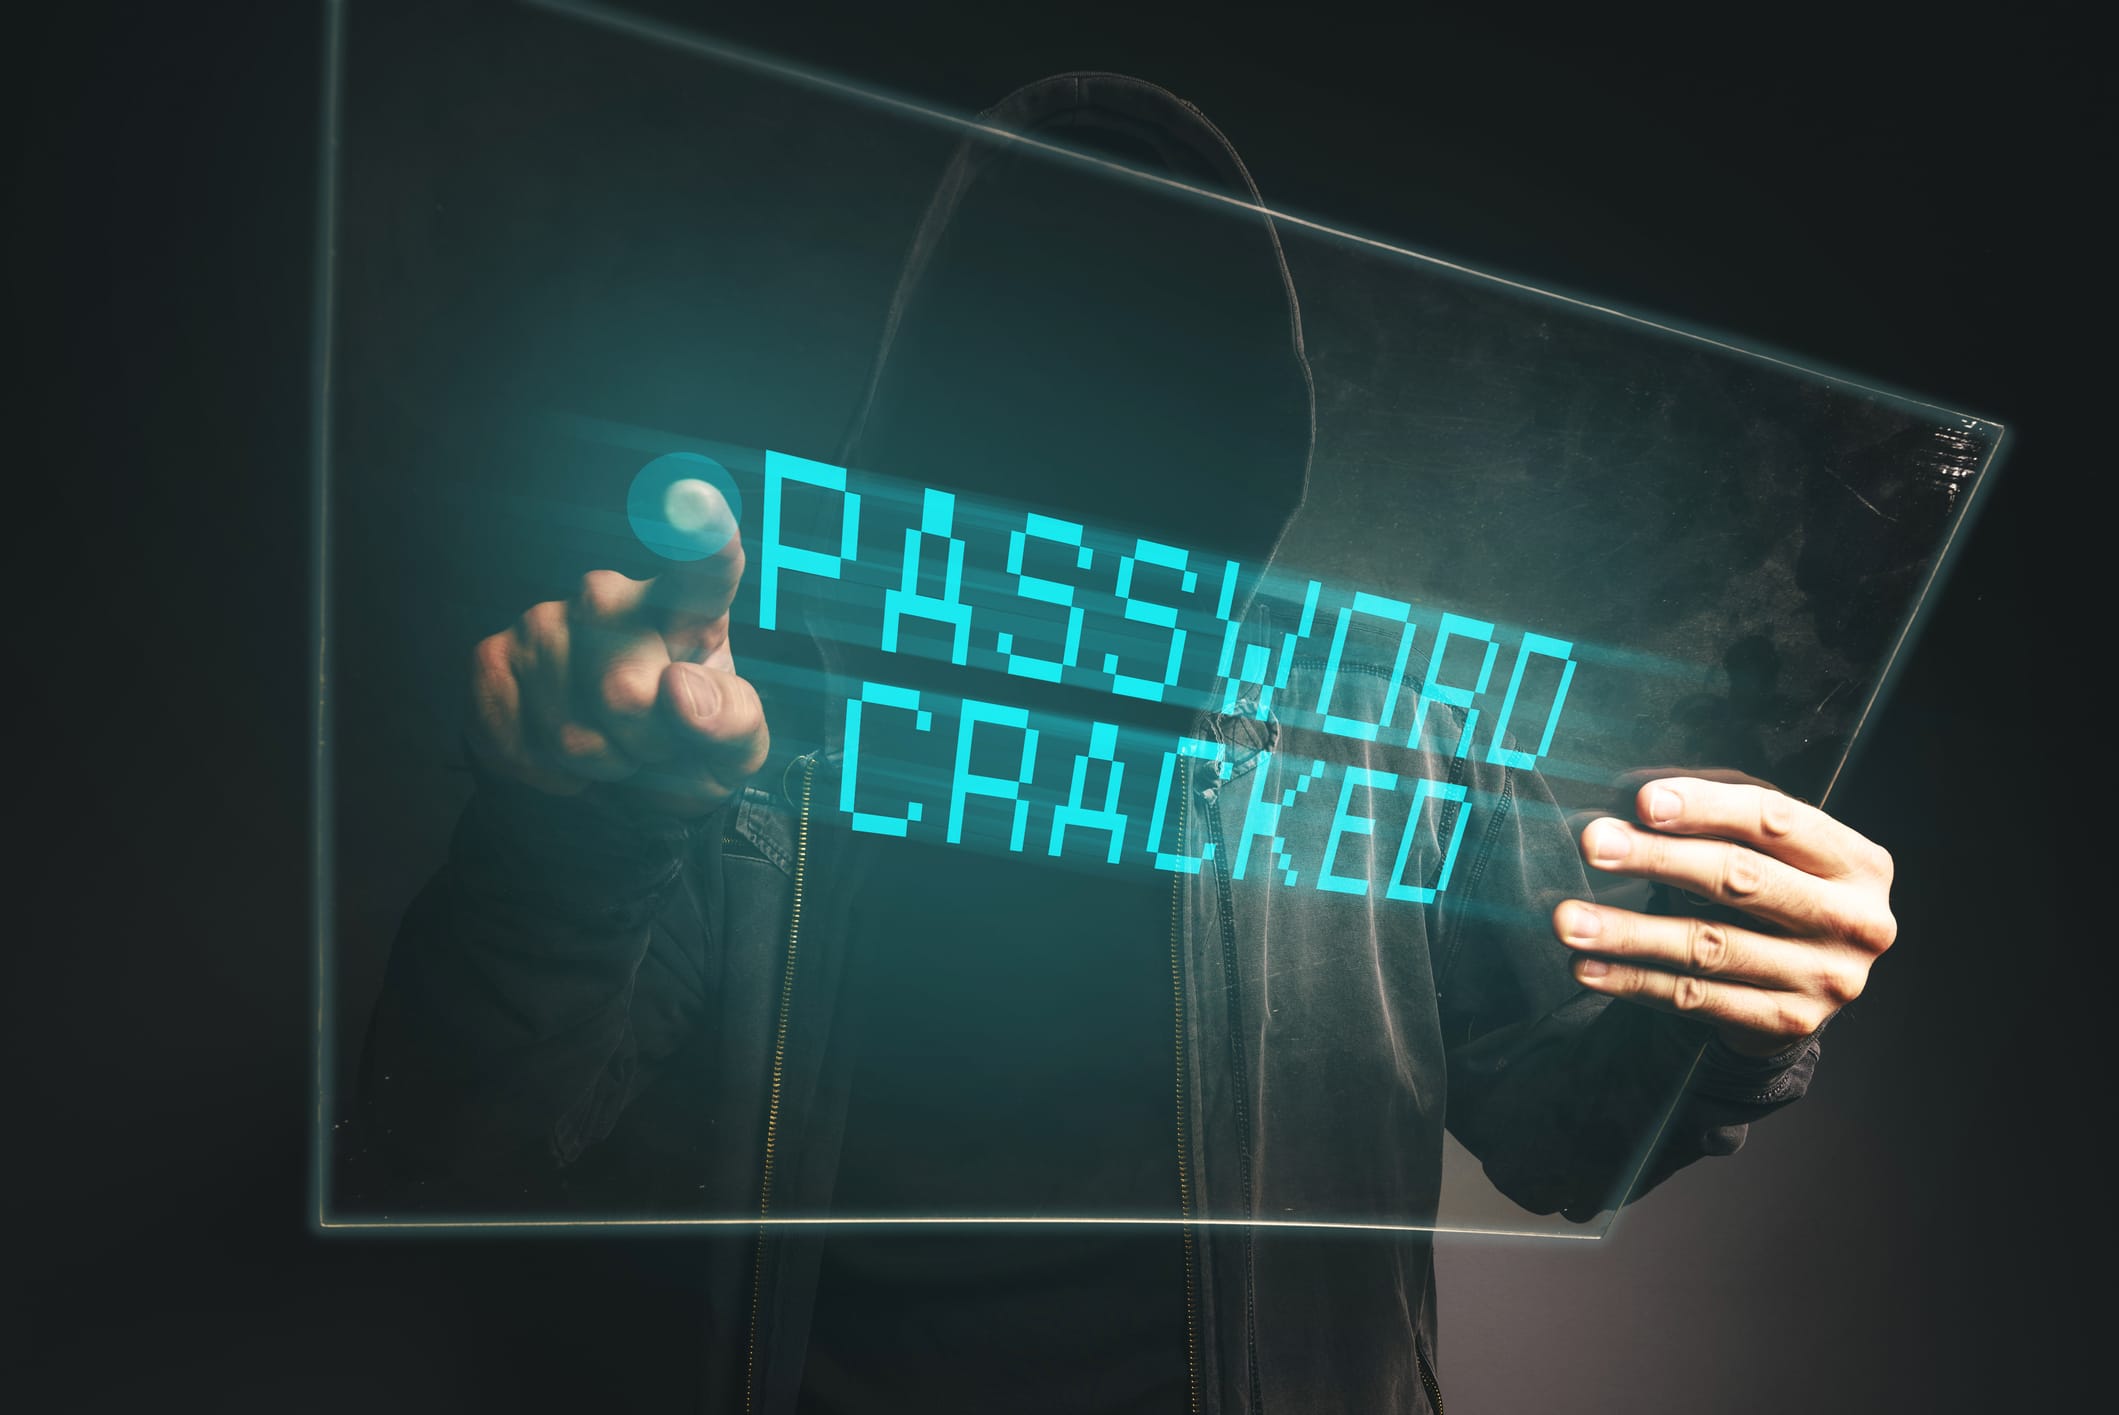 Password cracking application